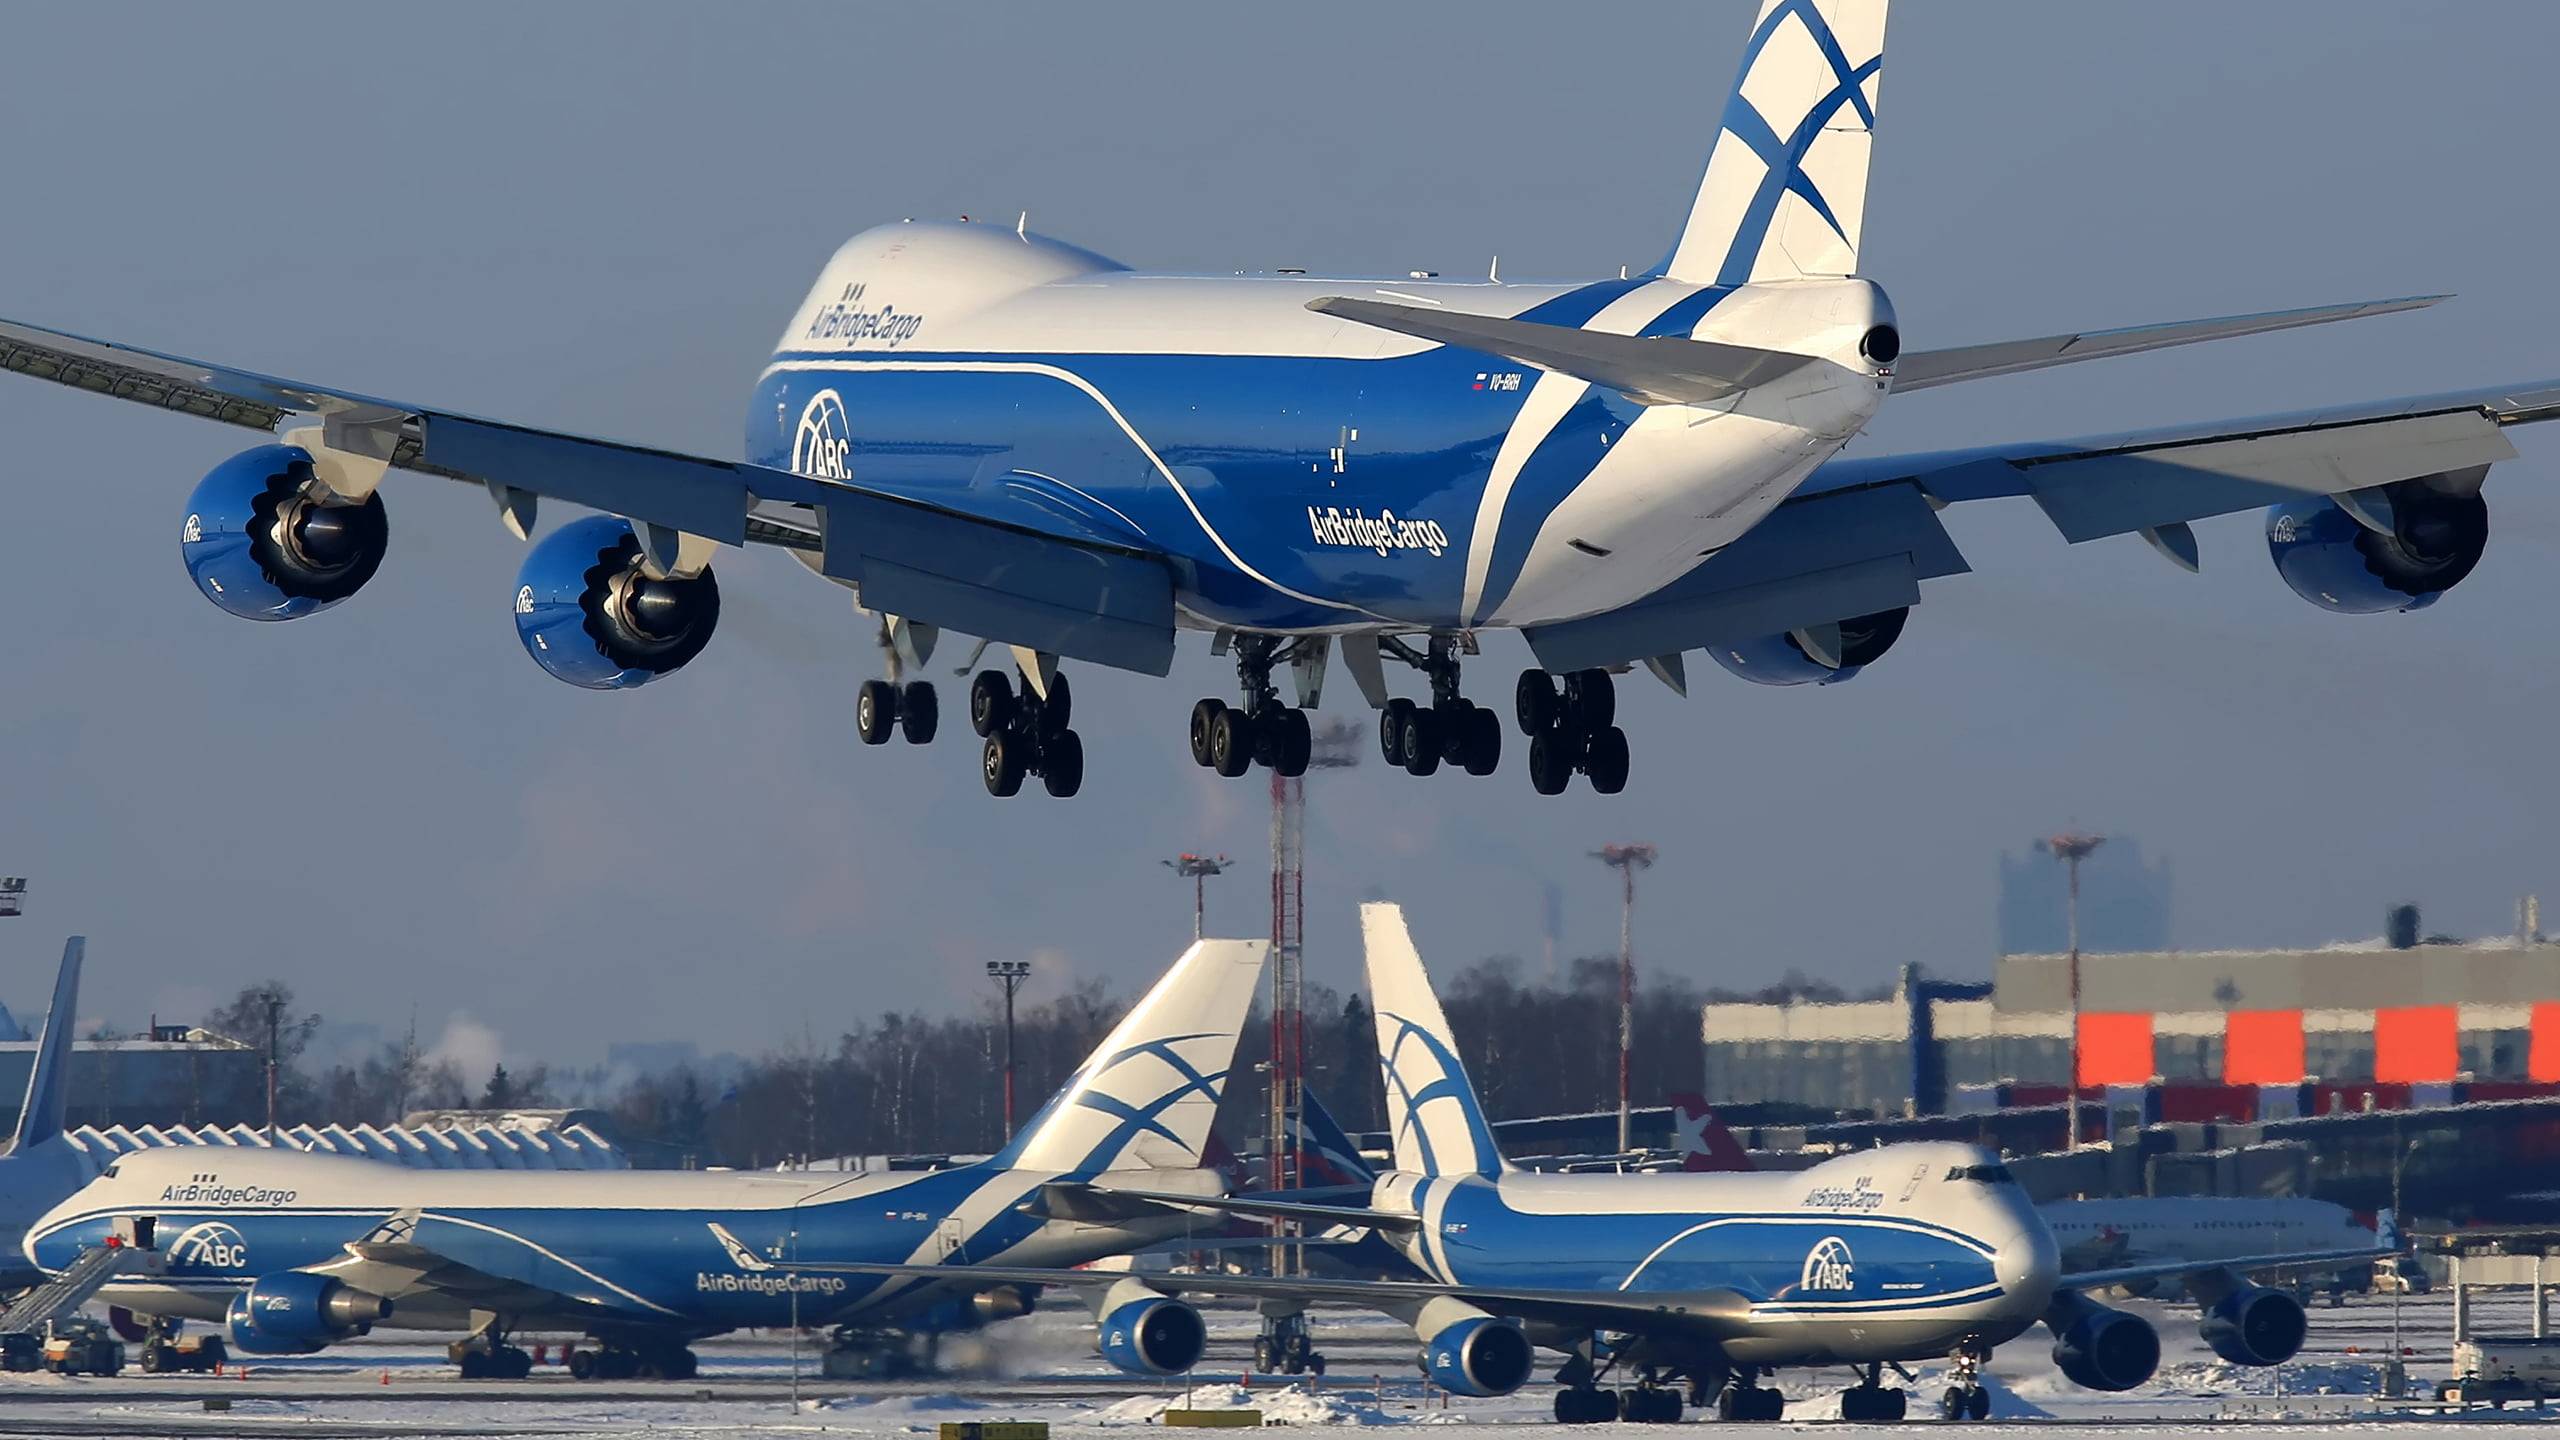 Boeing 747 — база знаний